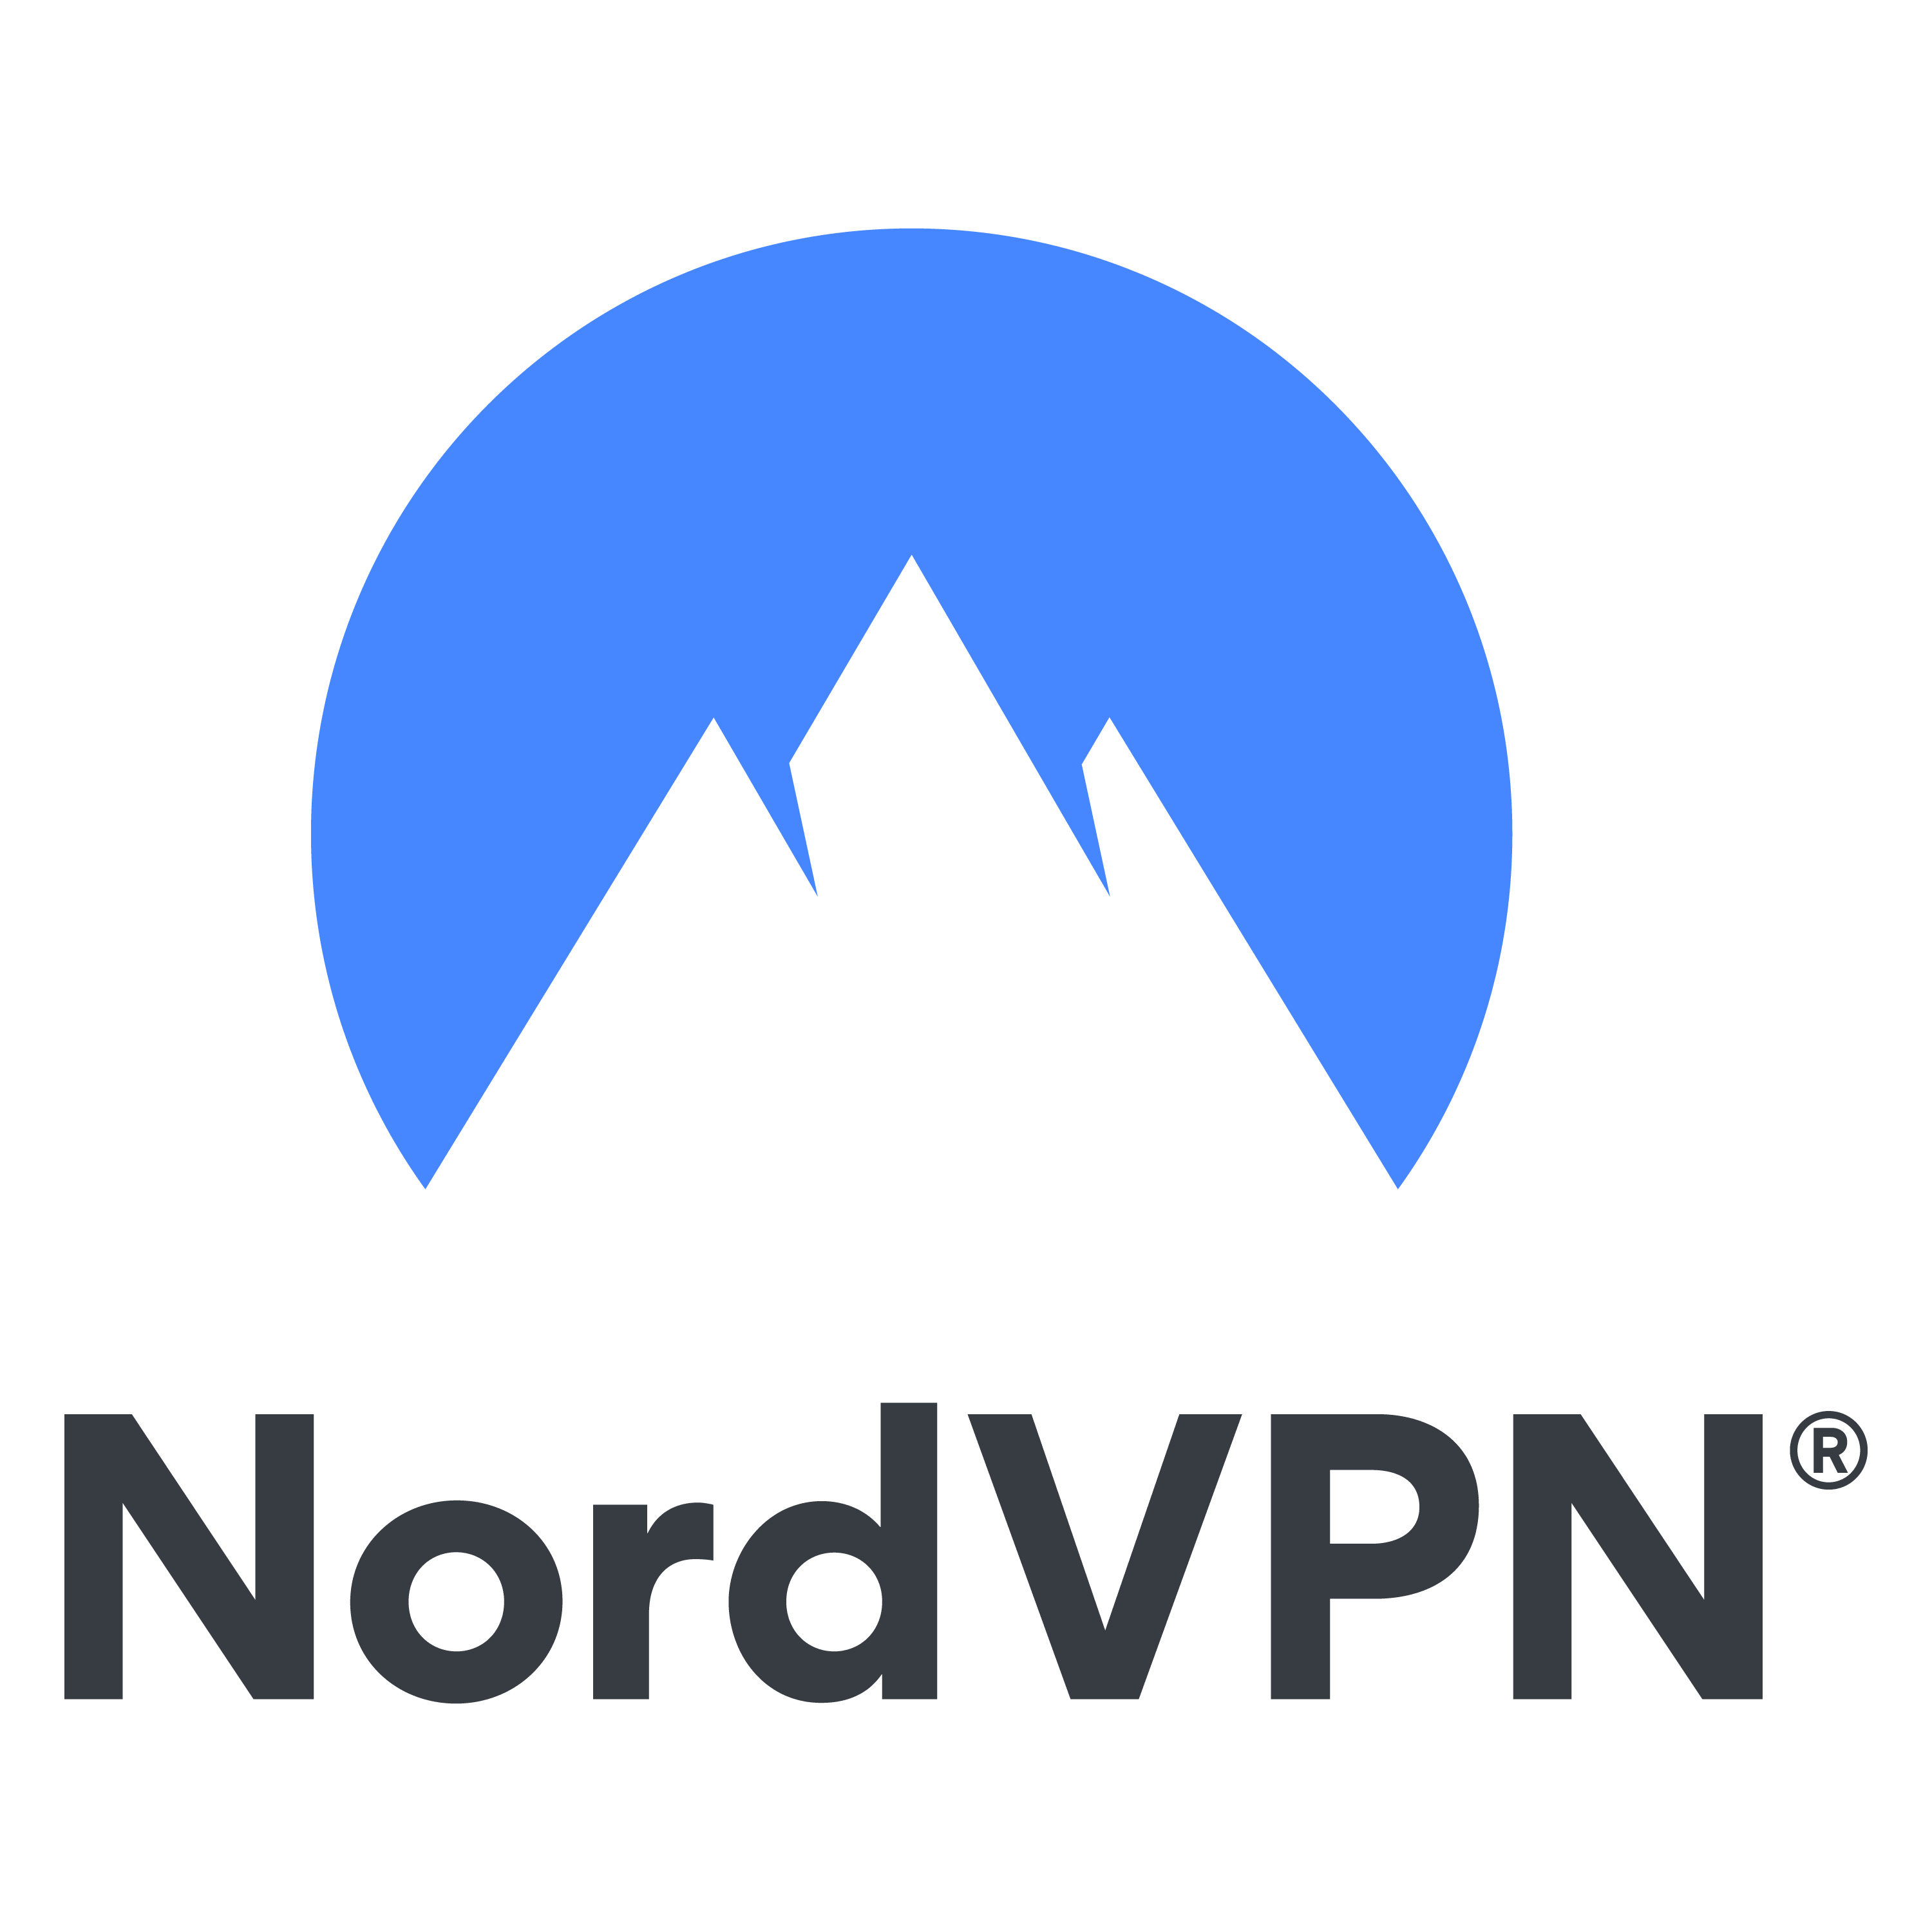 NordVPN 7.10.2 Crack Reddit Free Download (Till 2025) Latest Version